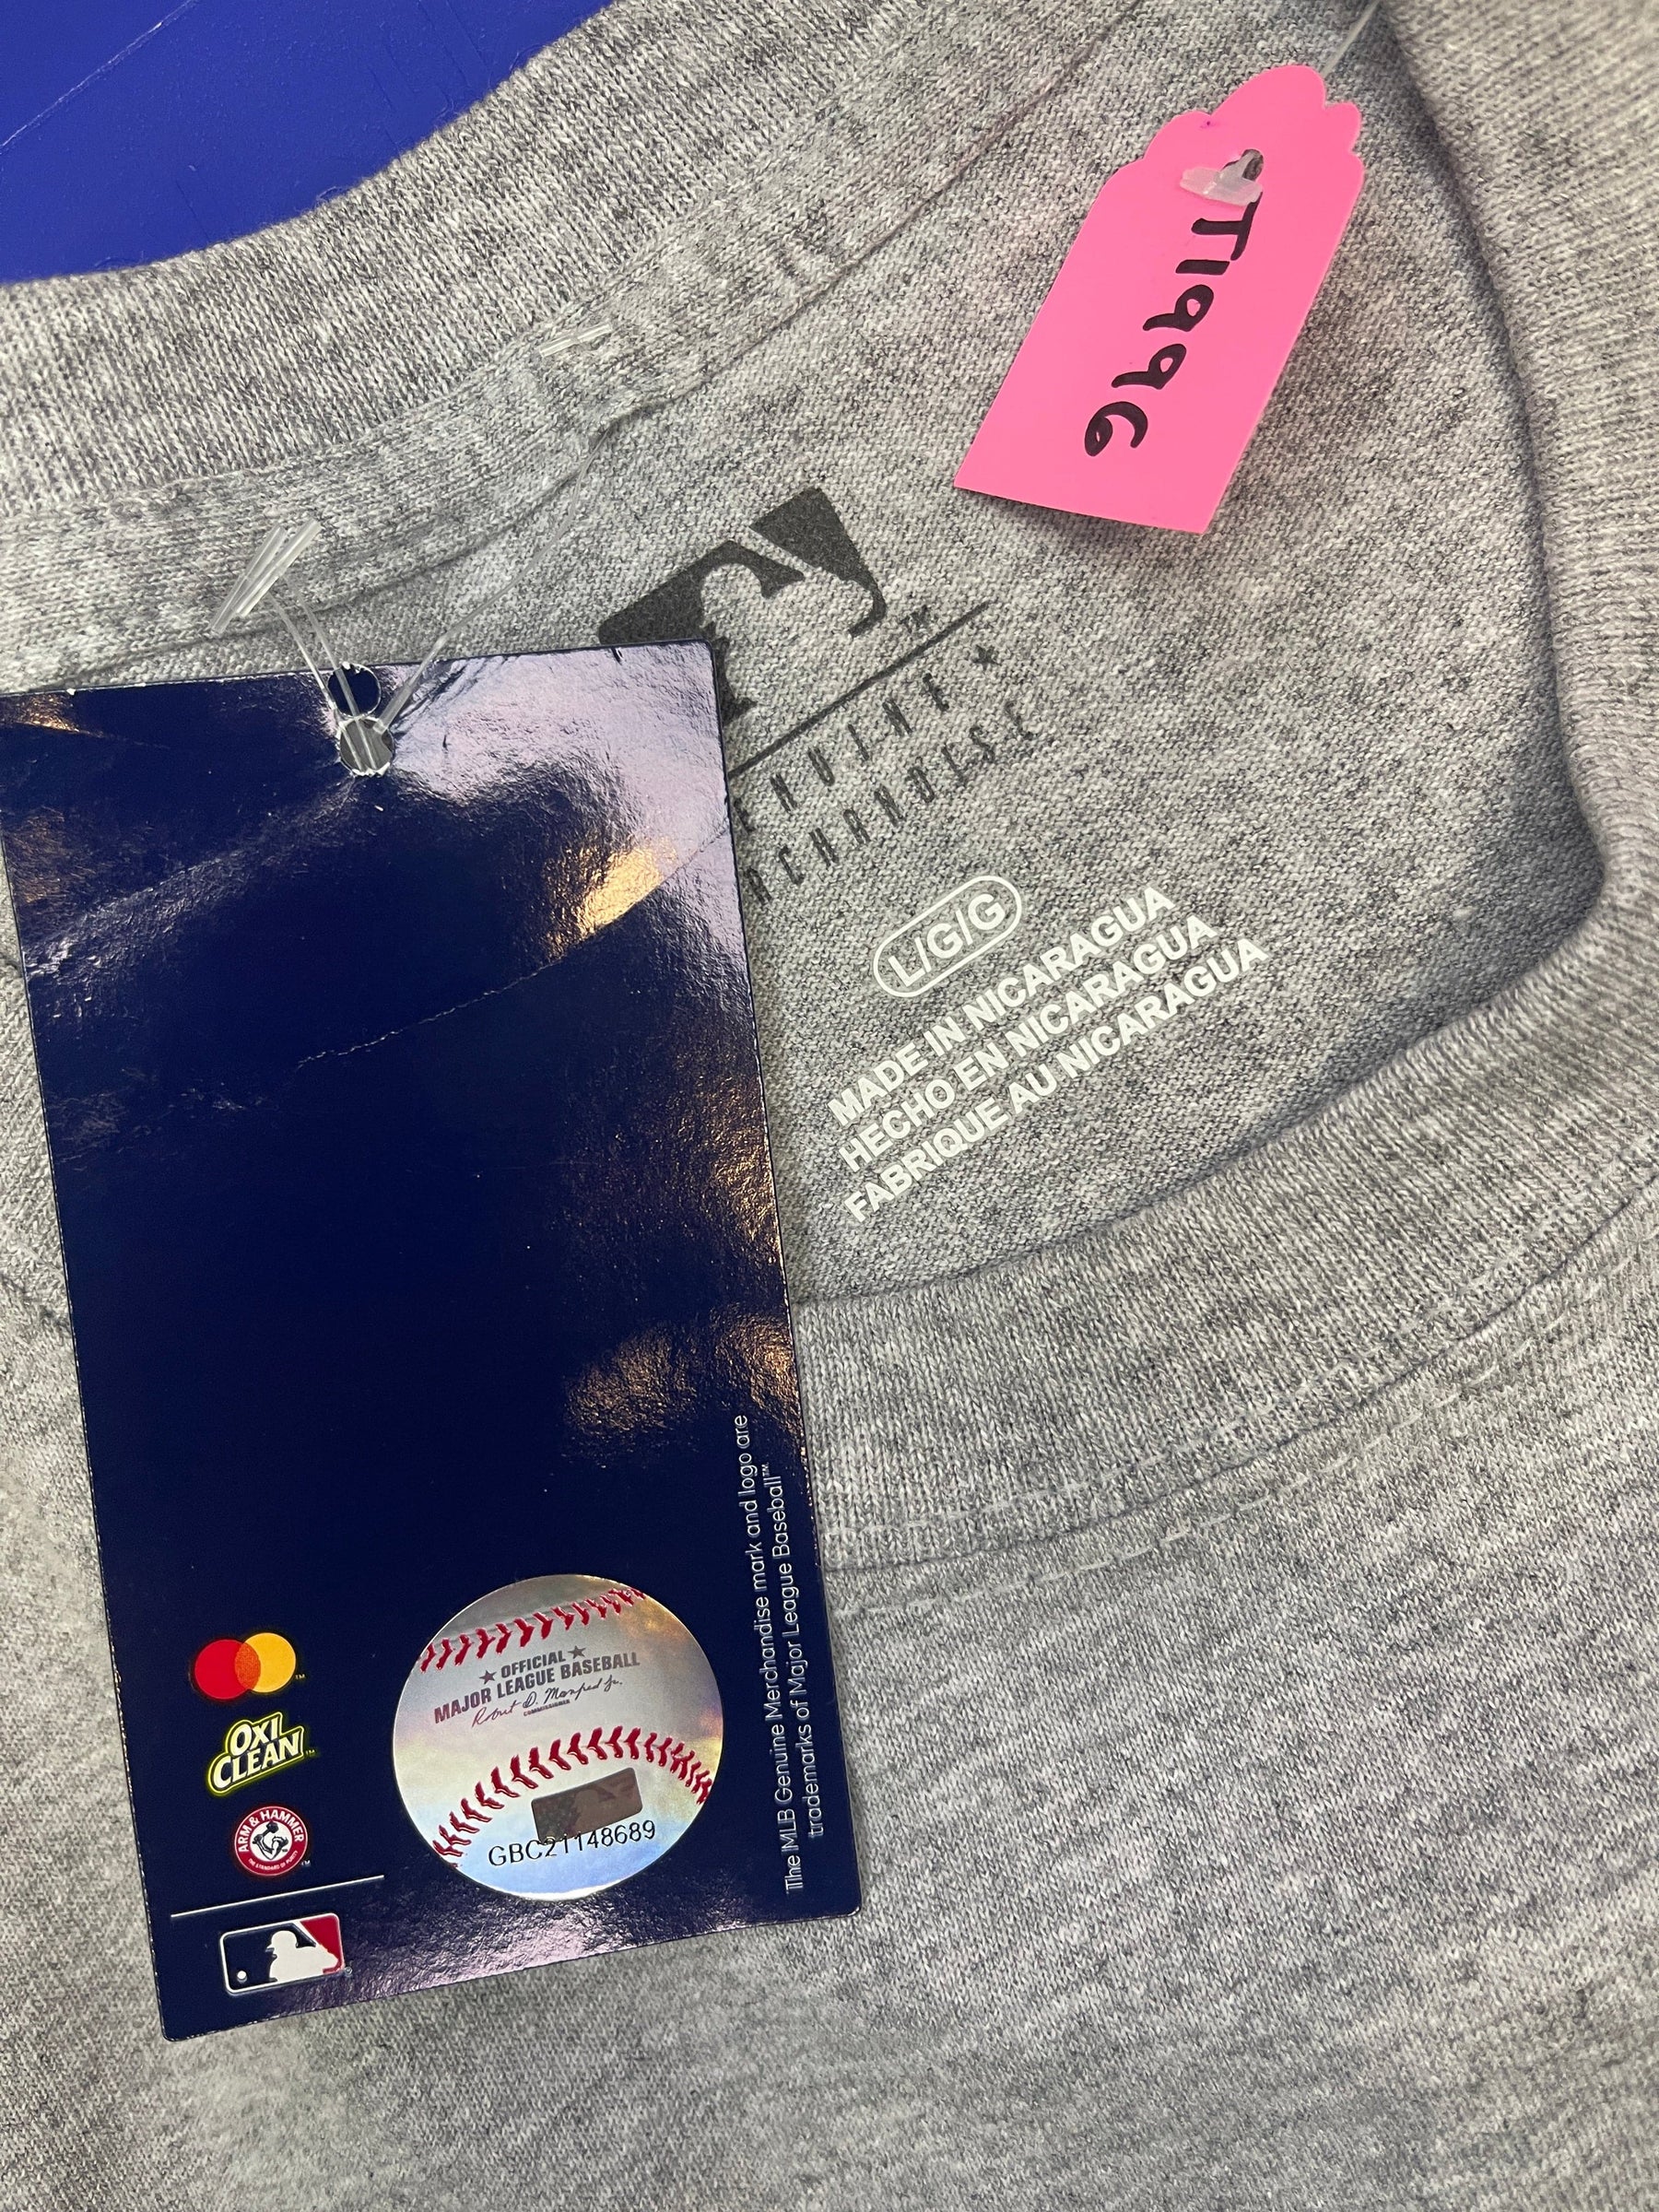 MLB Milwaukee Brewers Heathered Grey T-Shirt Men's Large NWT